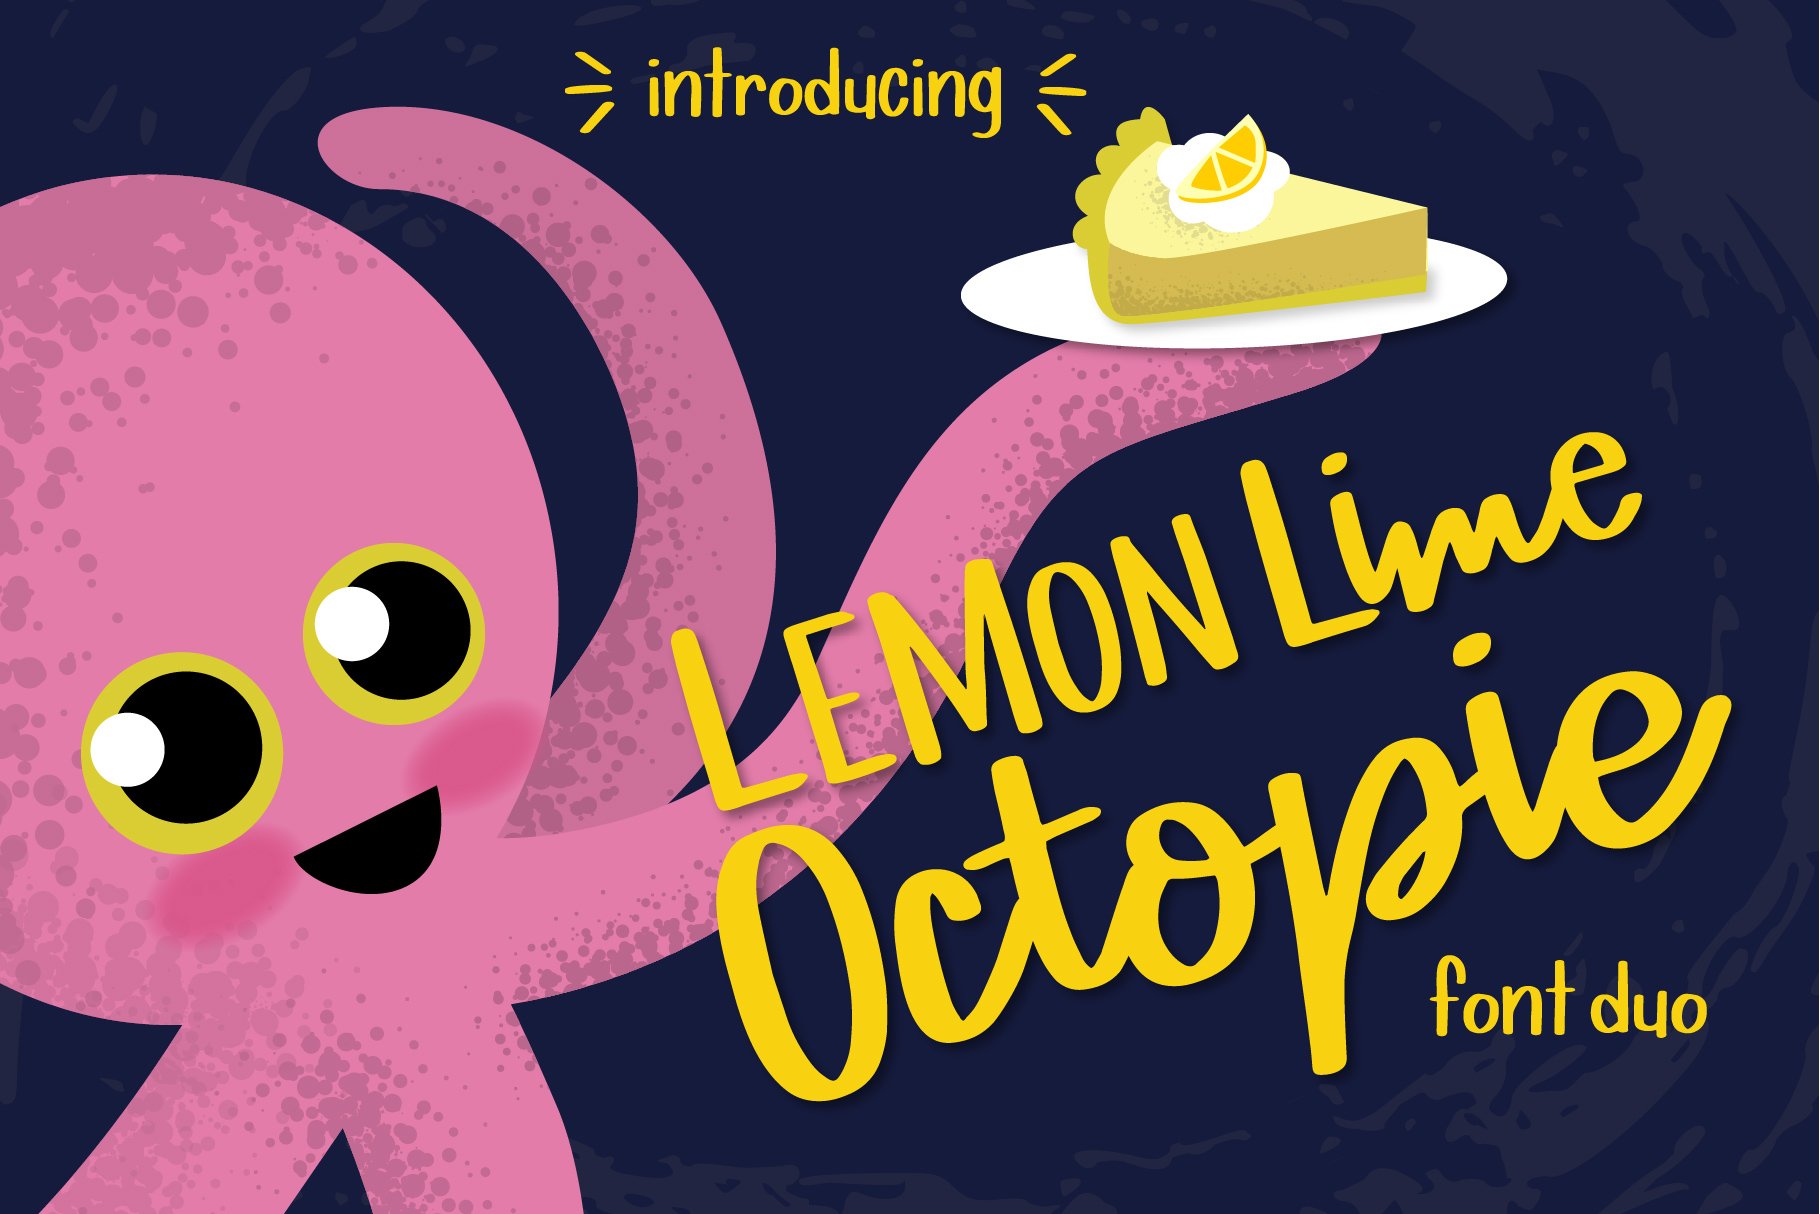 Lemon Lime Octopie Font Duo cover image.